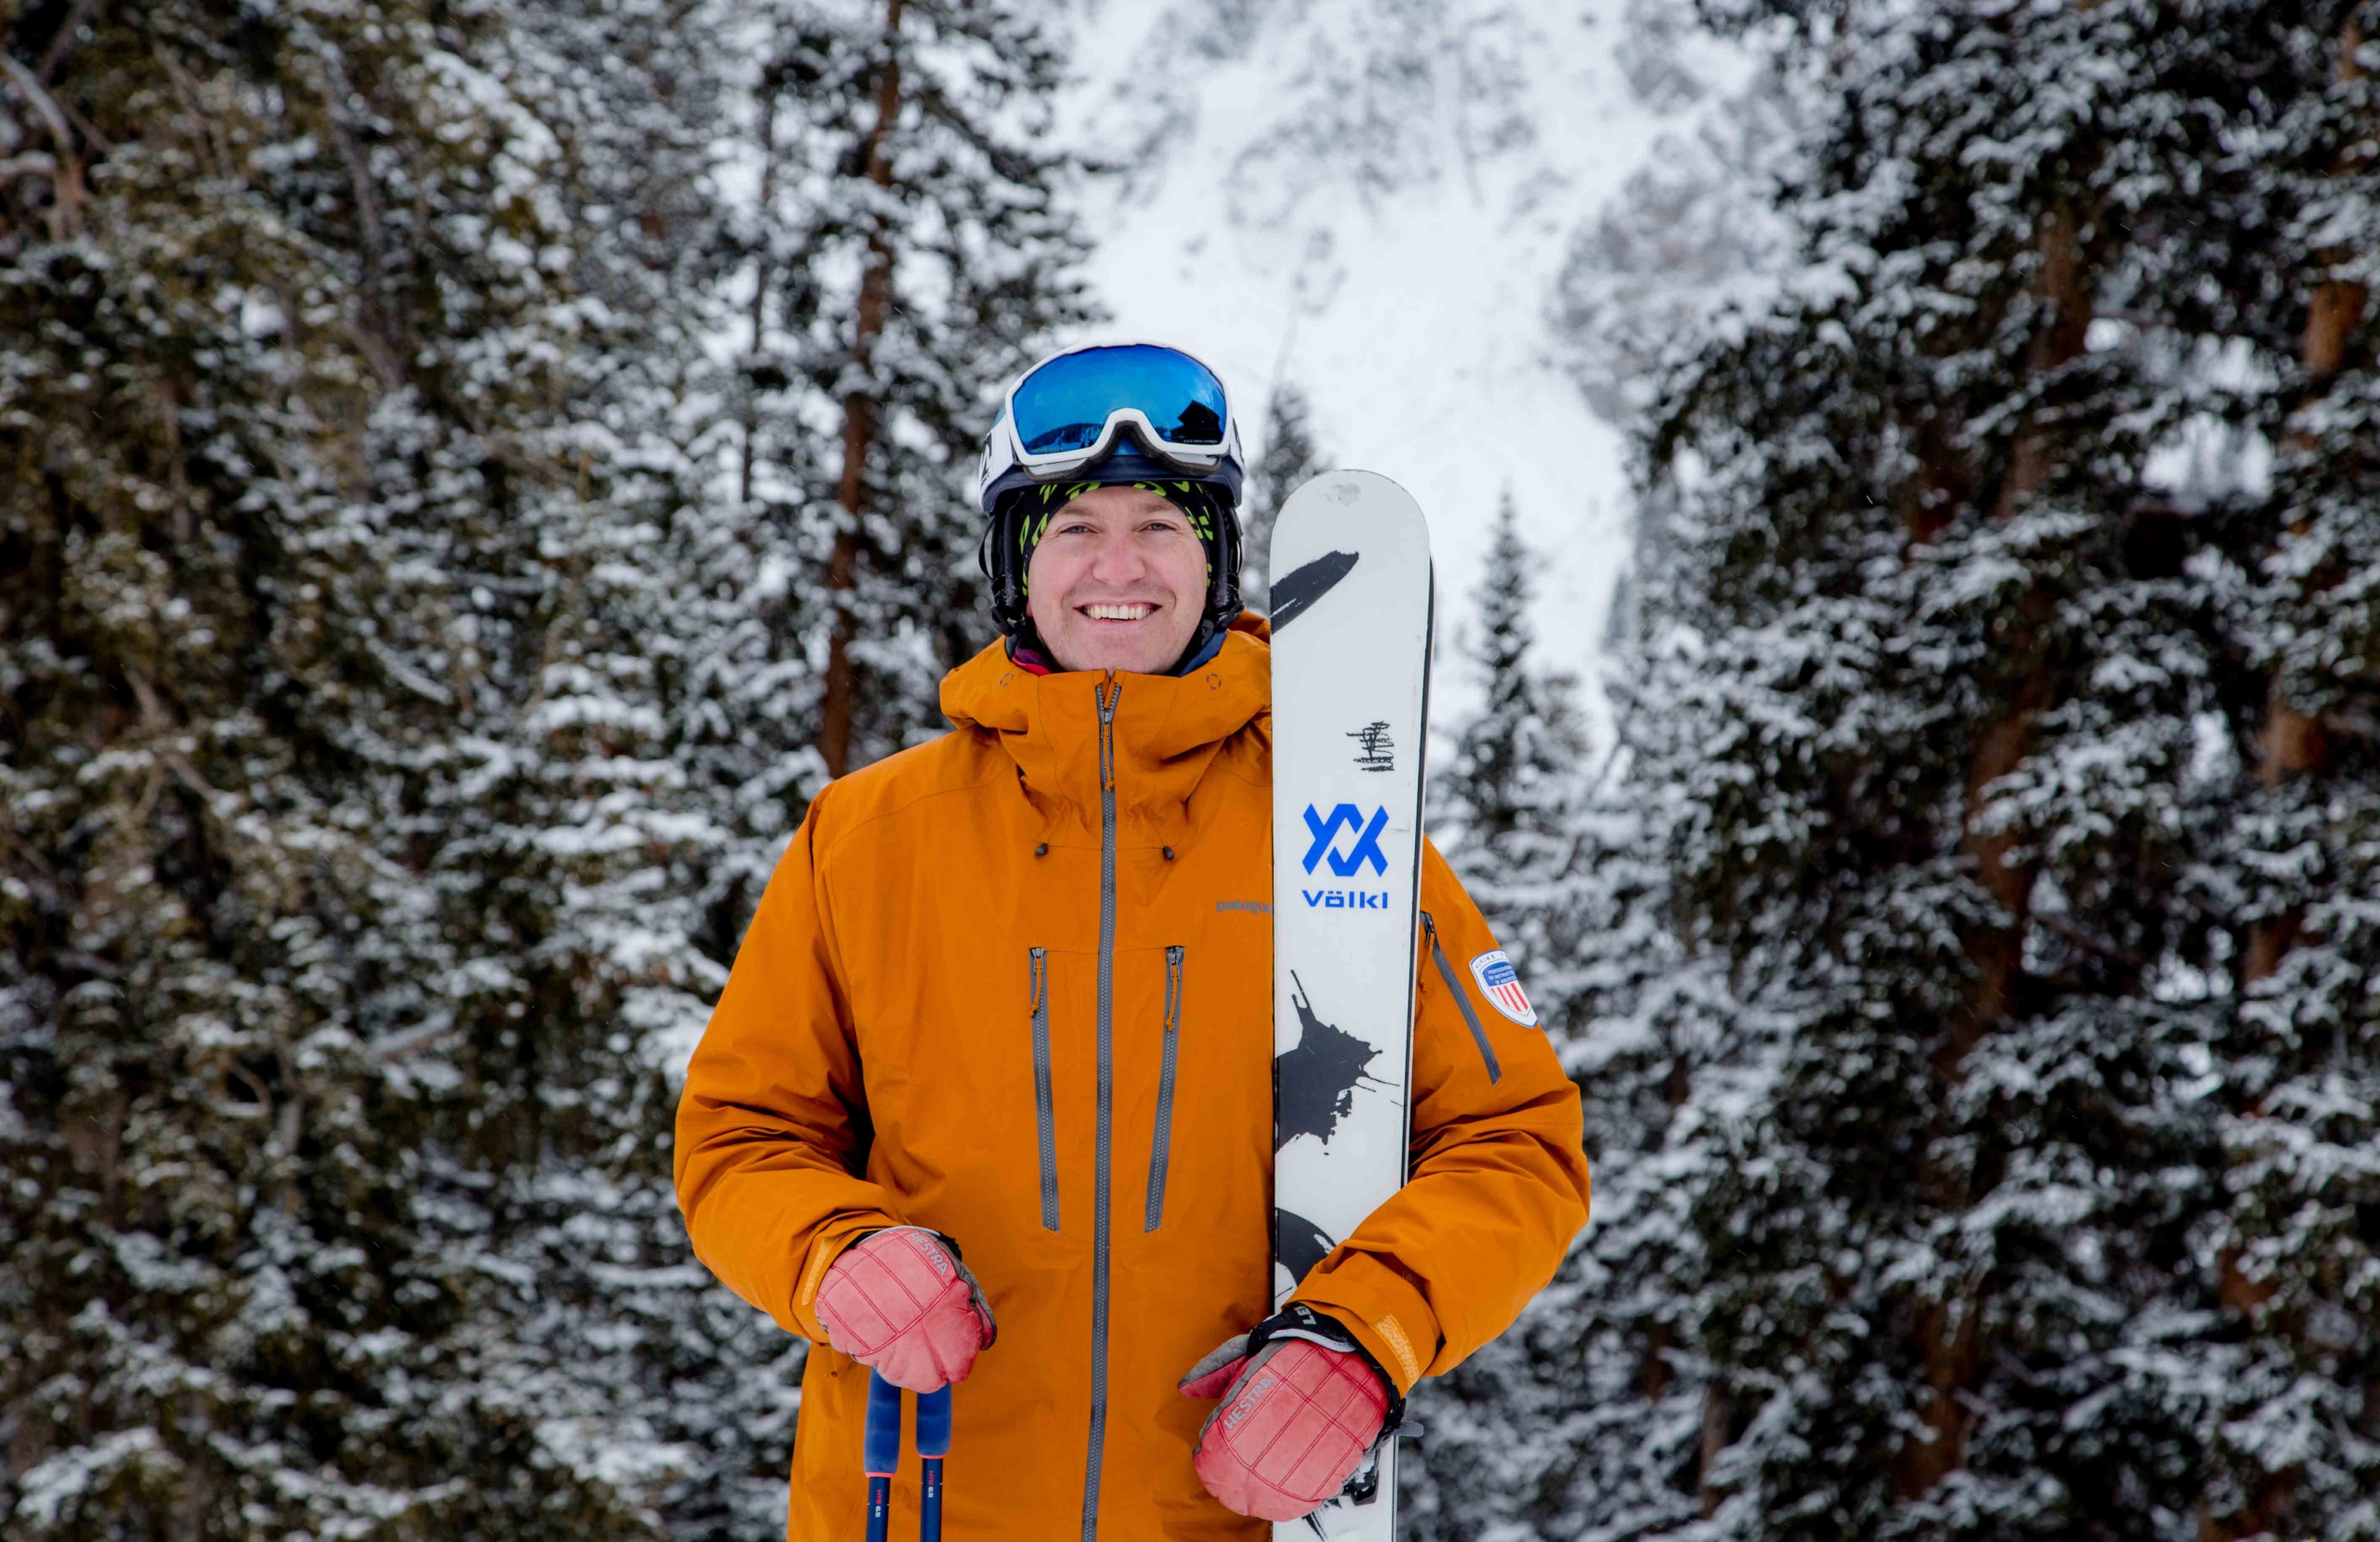 PSIA Alpine Team member Ryan Christofferson